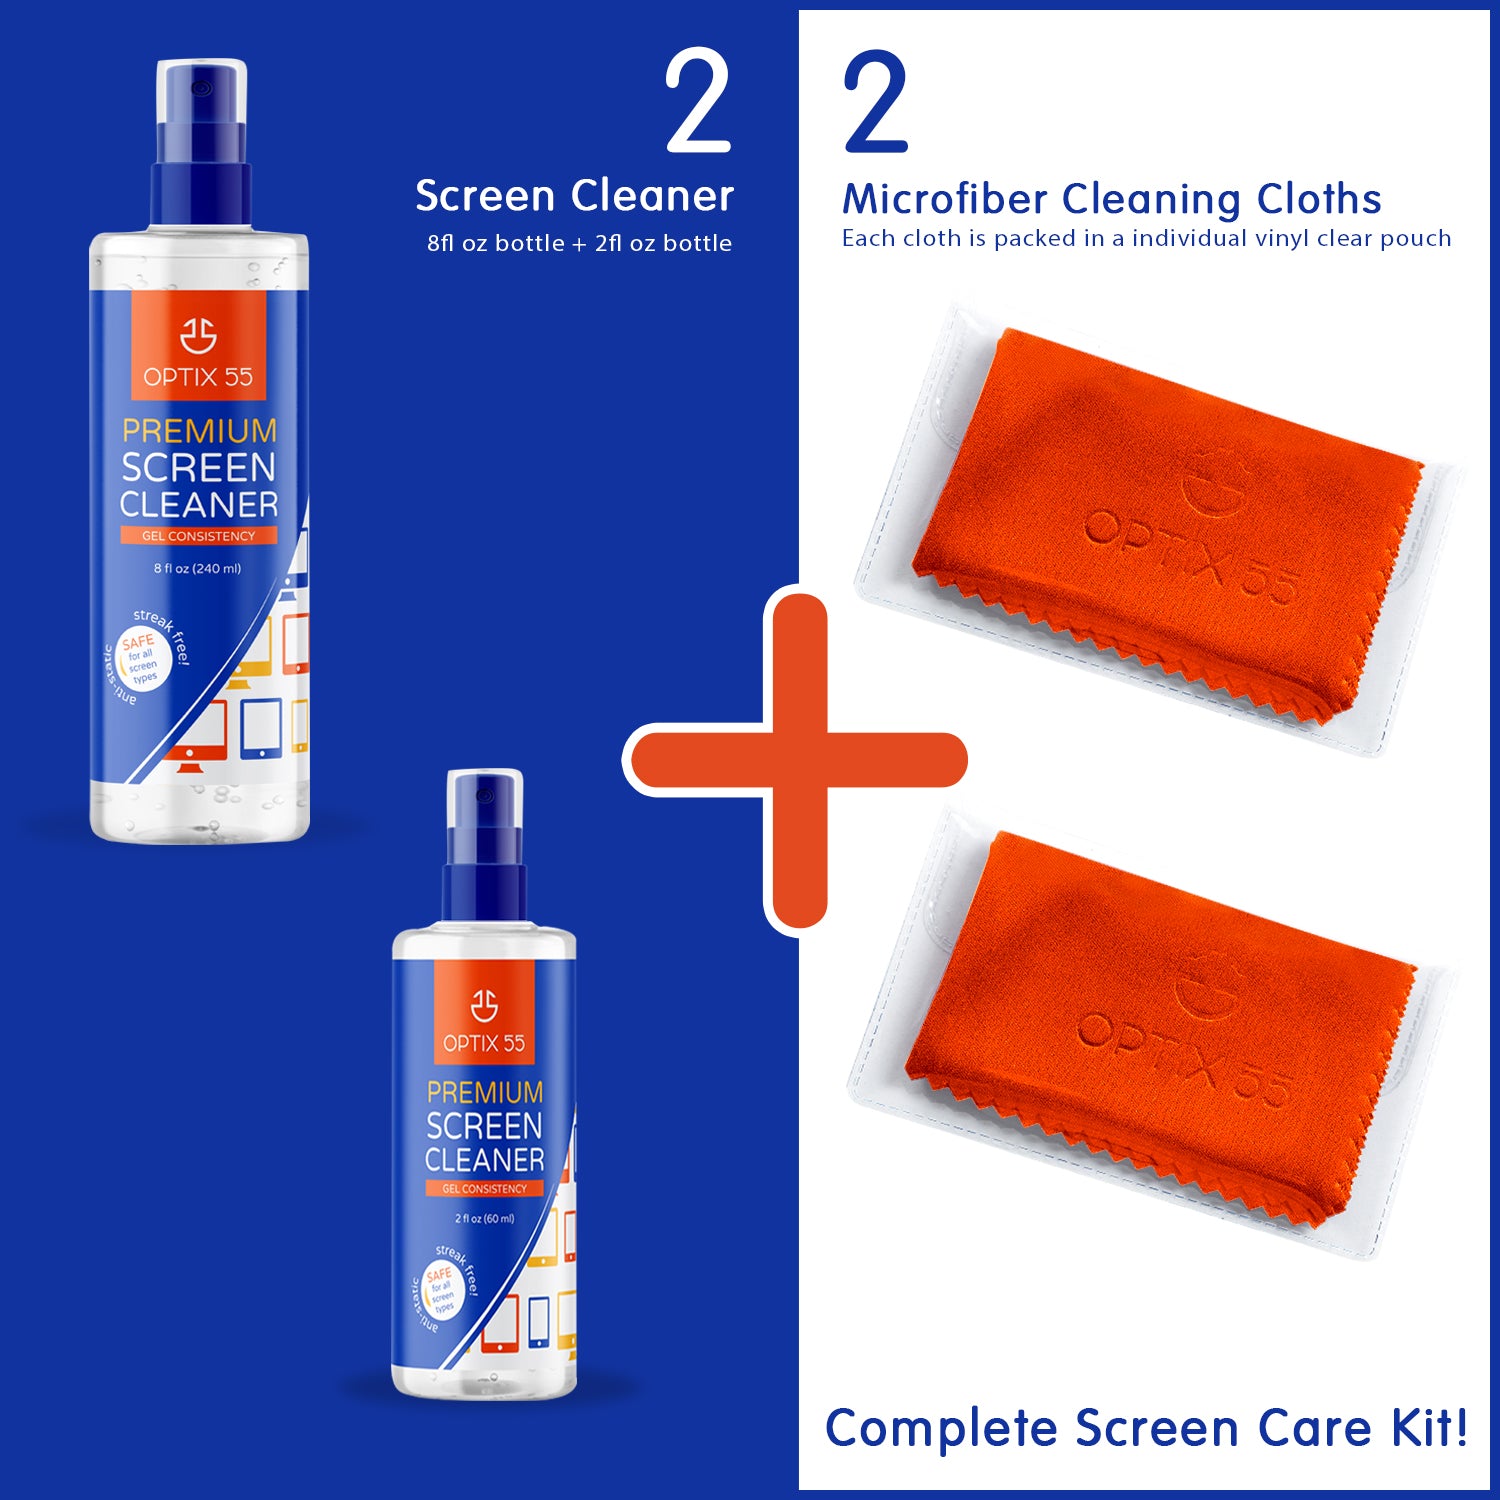 Premium Gel Screen Cleaner Spray Kit